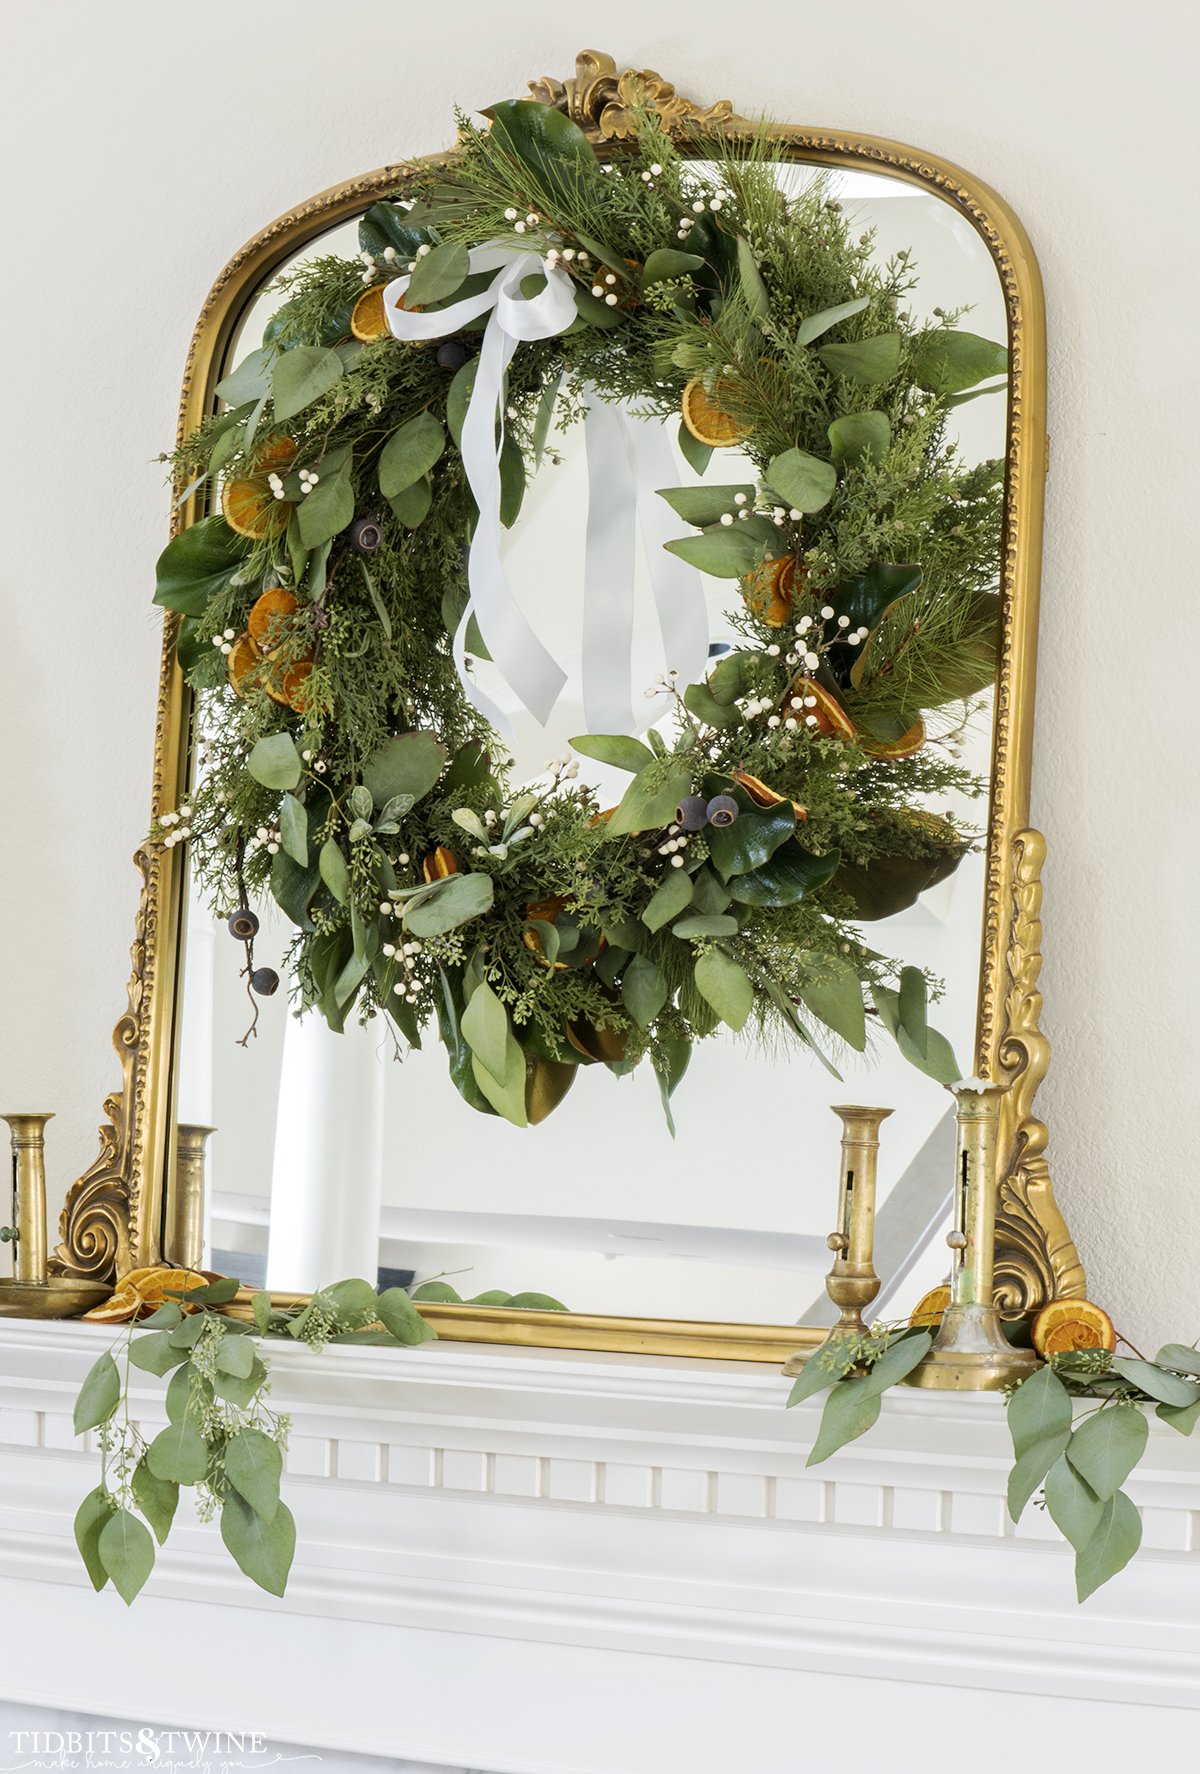 How to Make a Beautiful Dried Orange Wreath for Christmas